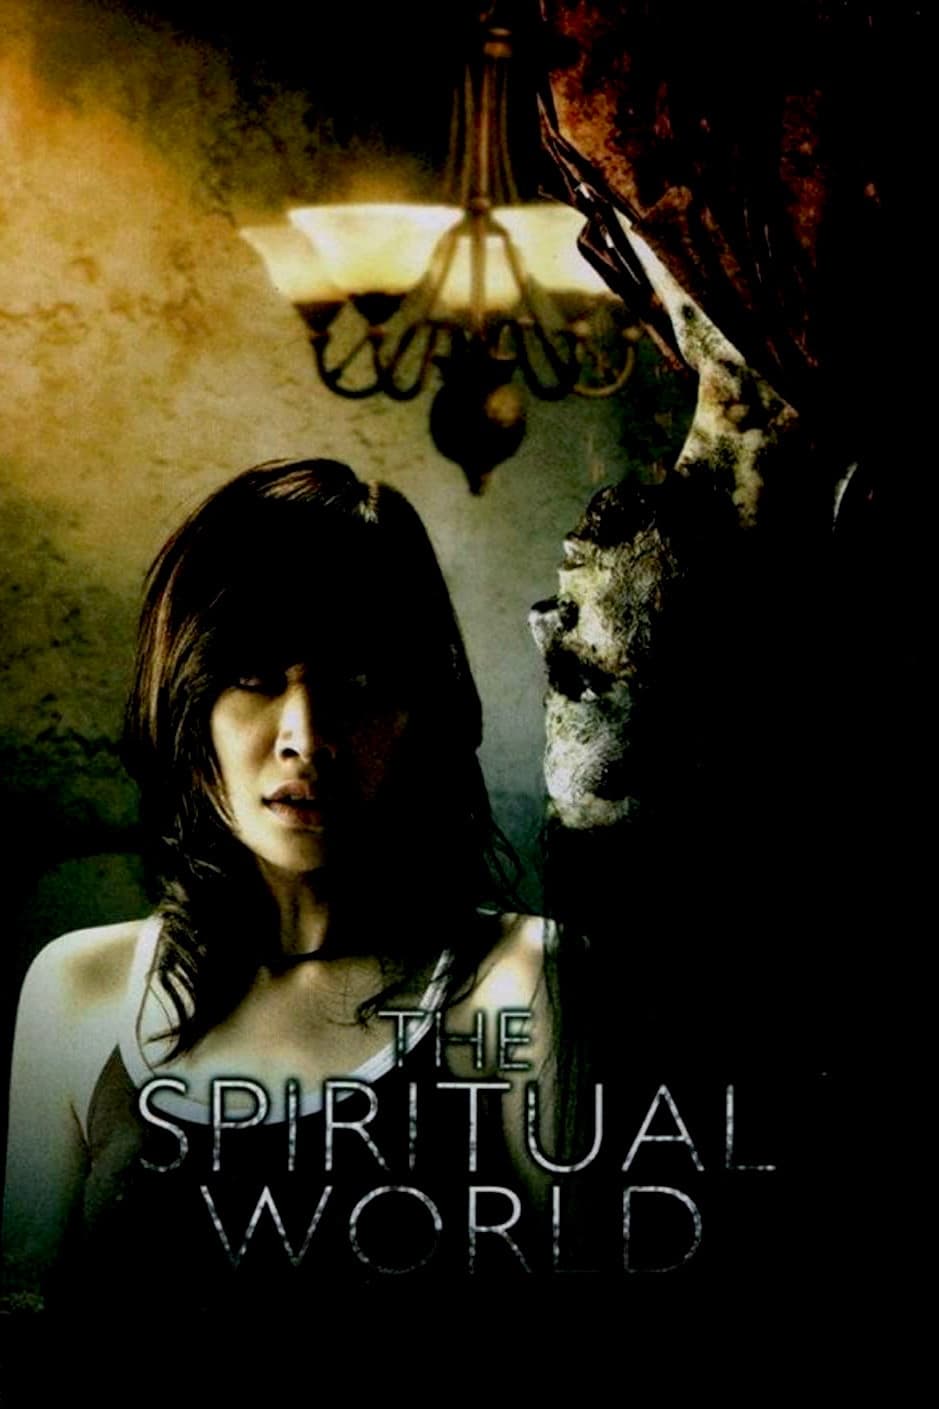 The Spiritual World (2007)